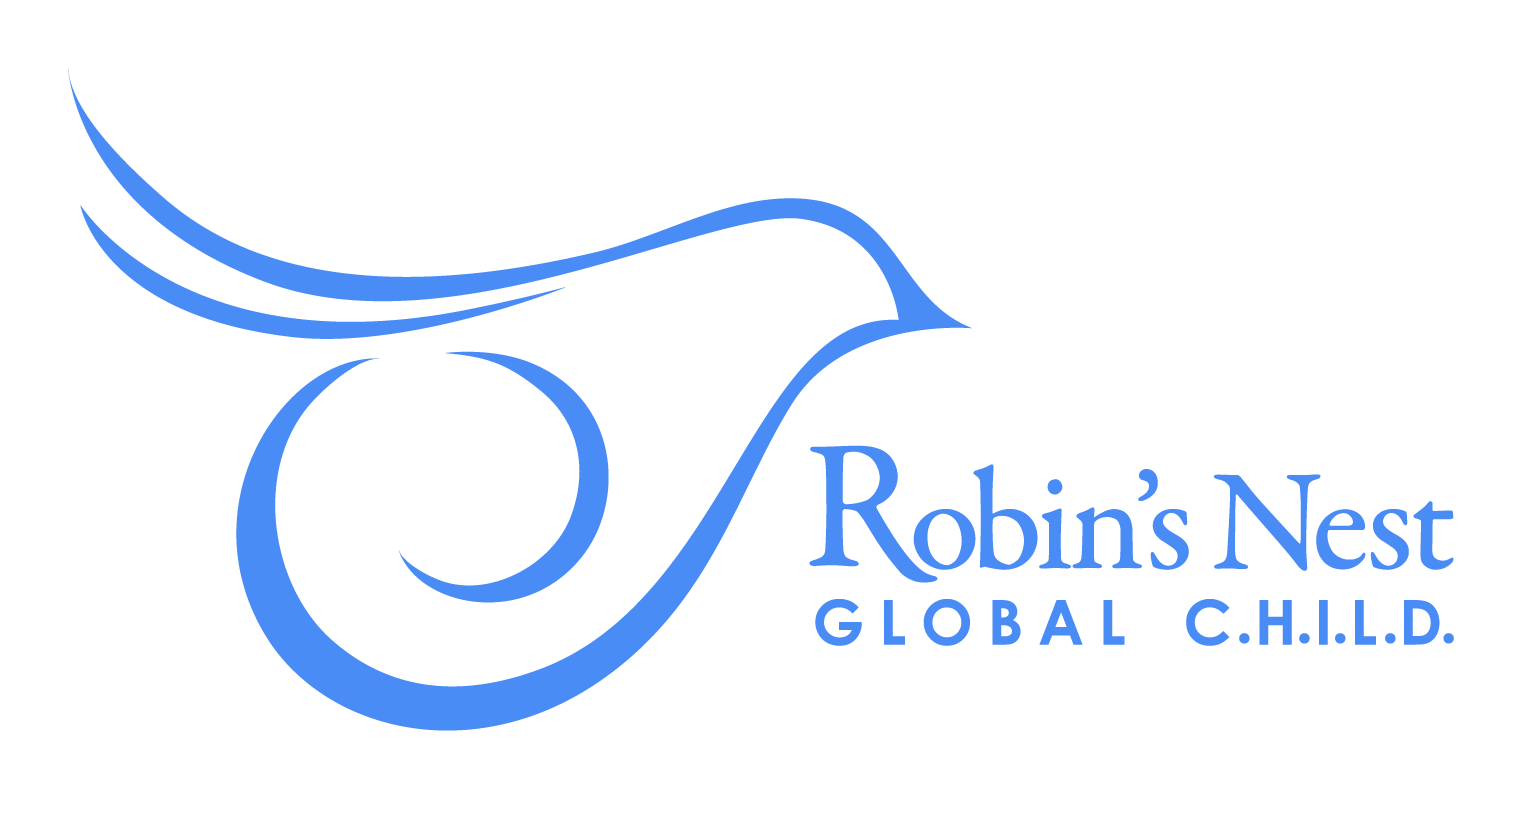 2021 Robins Nest global child blue